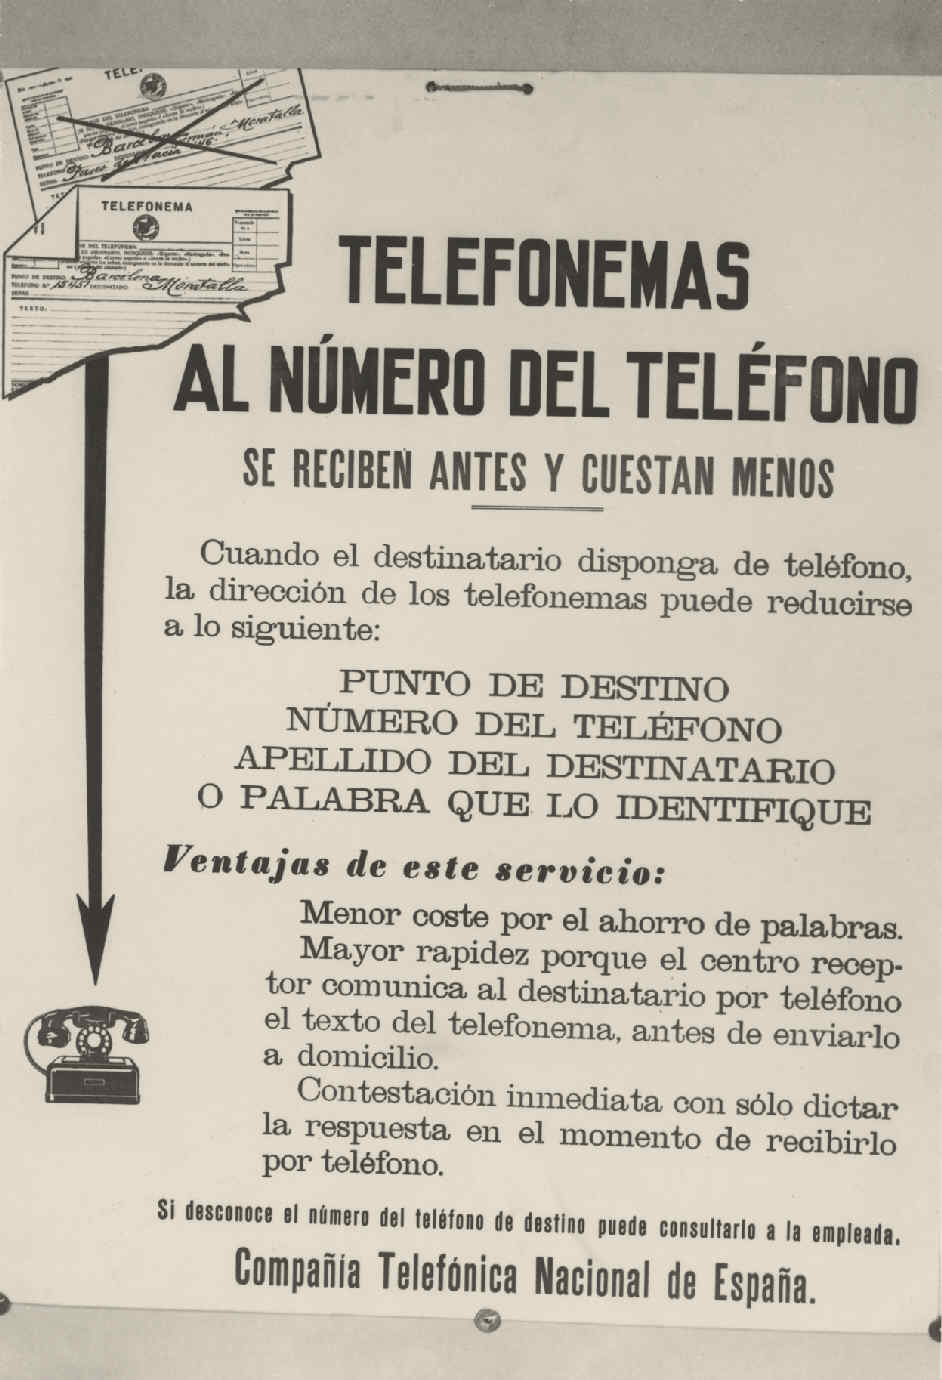 Telephoneme advertising poster.